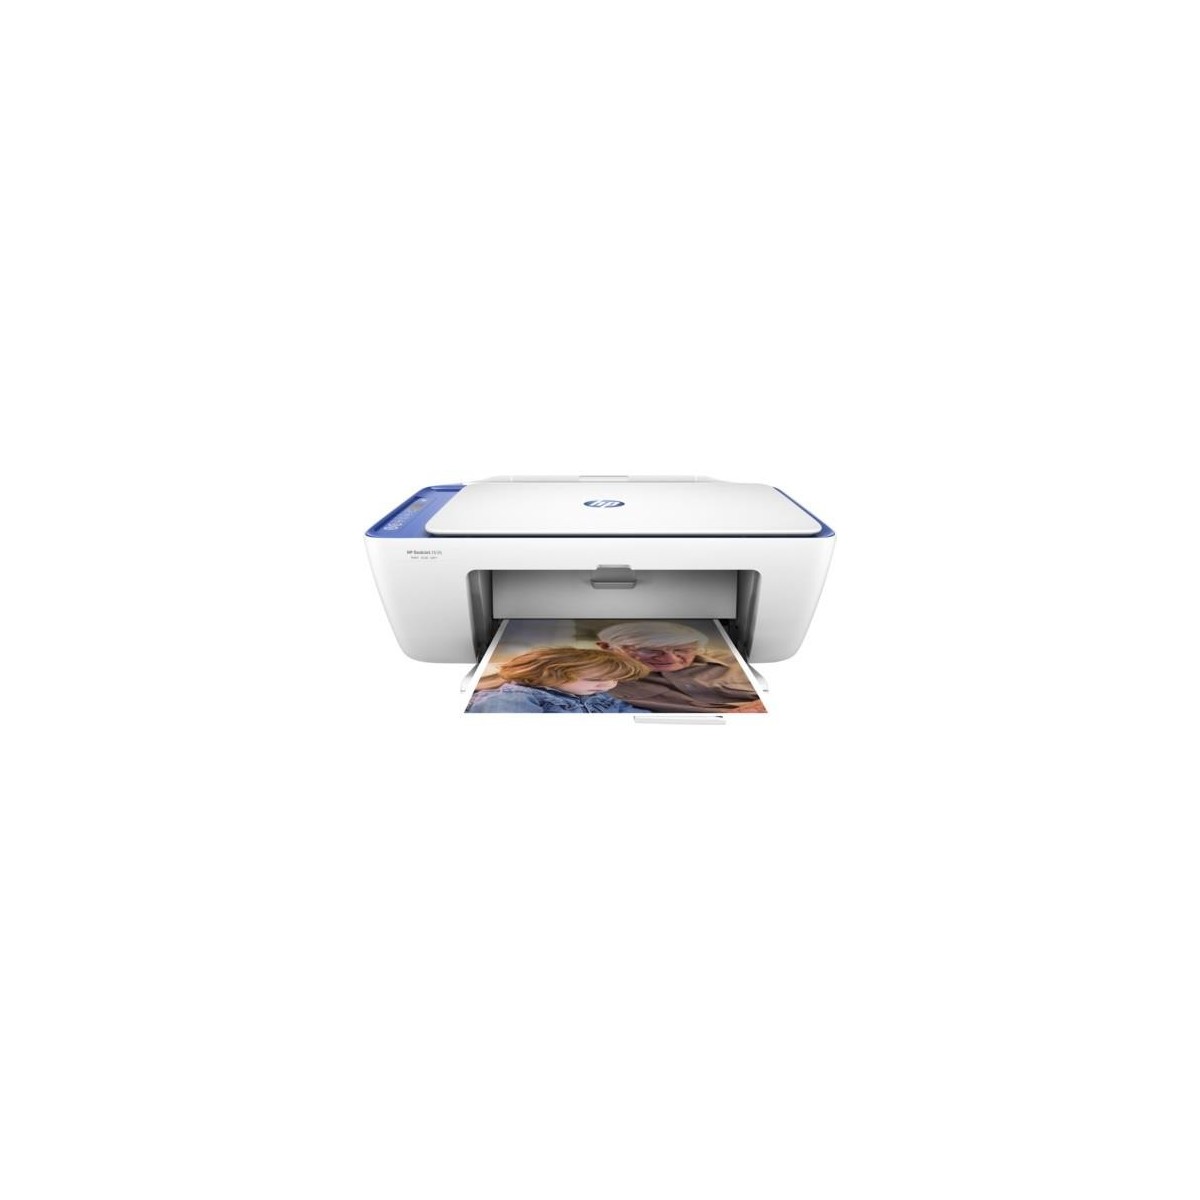 HP DeskJet 2630 - Thermal inkjet - Colour printing - 4800 x 1200 DPI - A4 - Direct printing - Blue - White